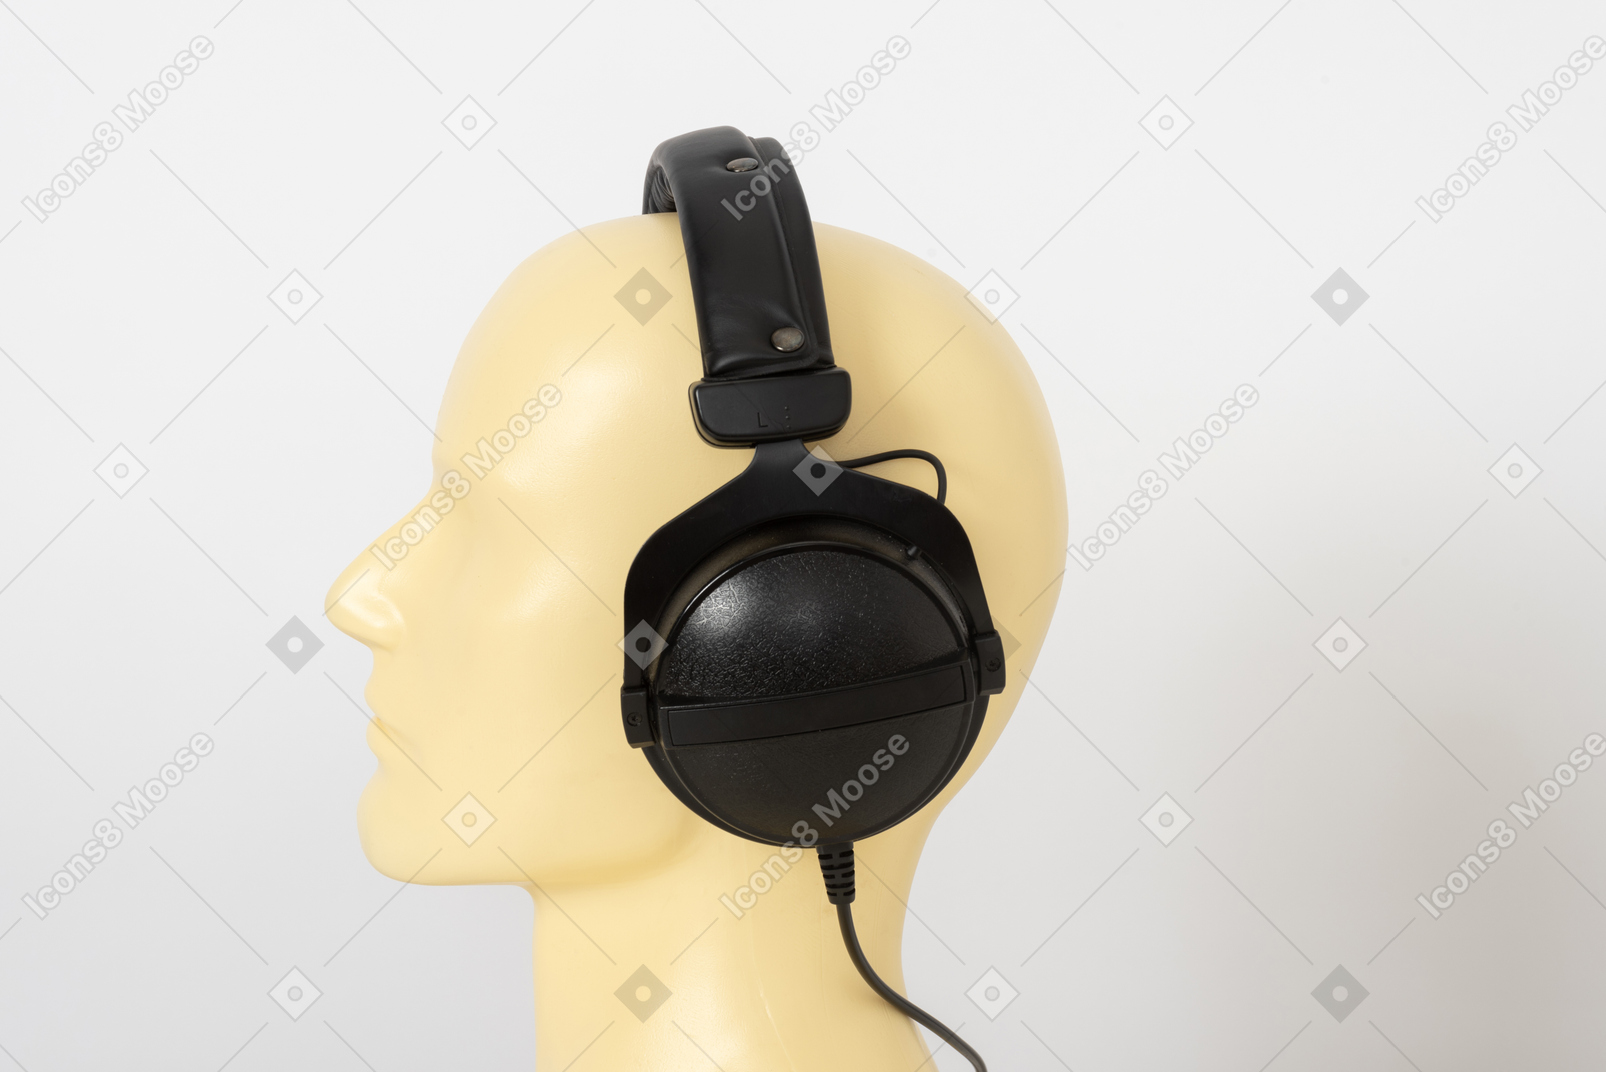 Headphones on a mannequin head